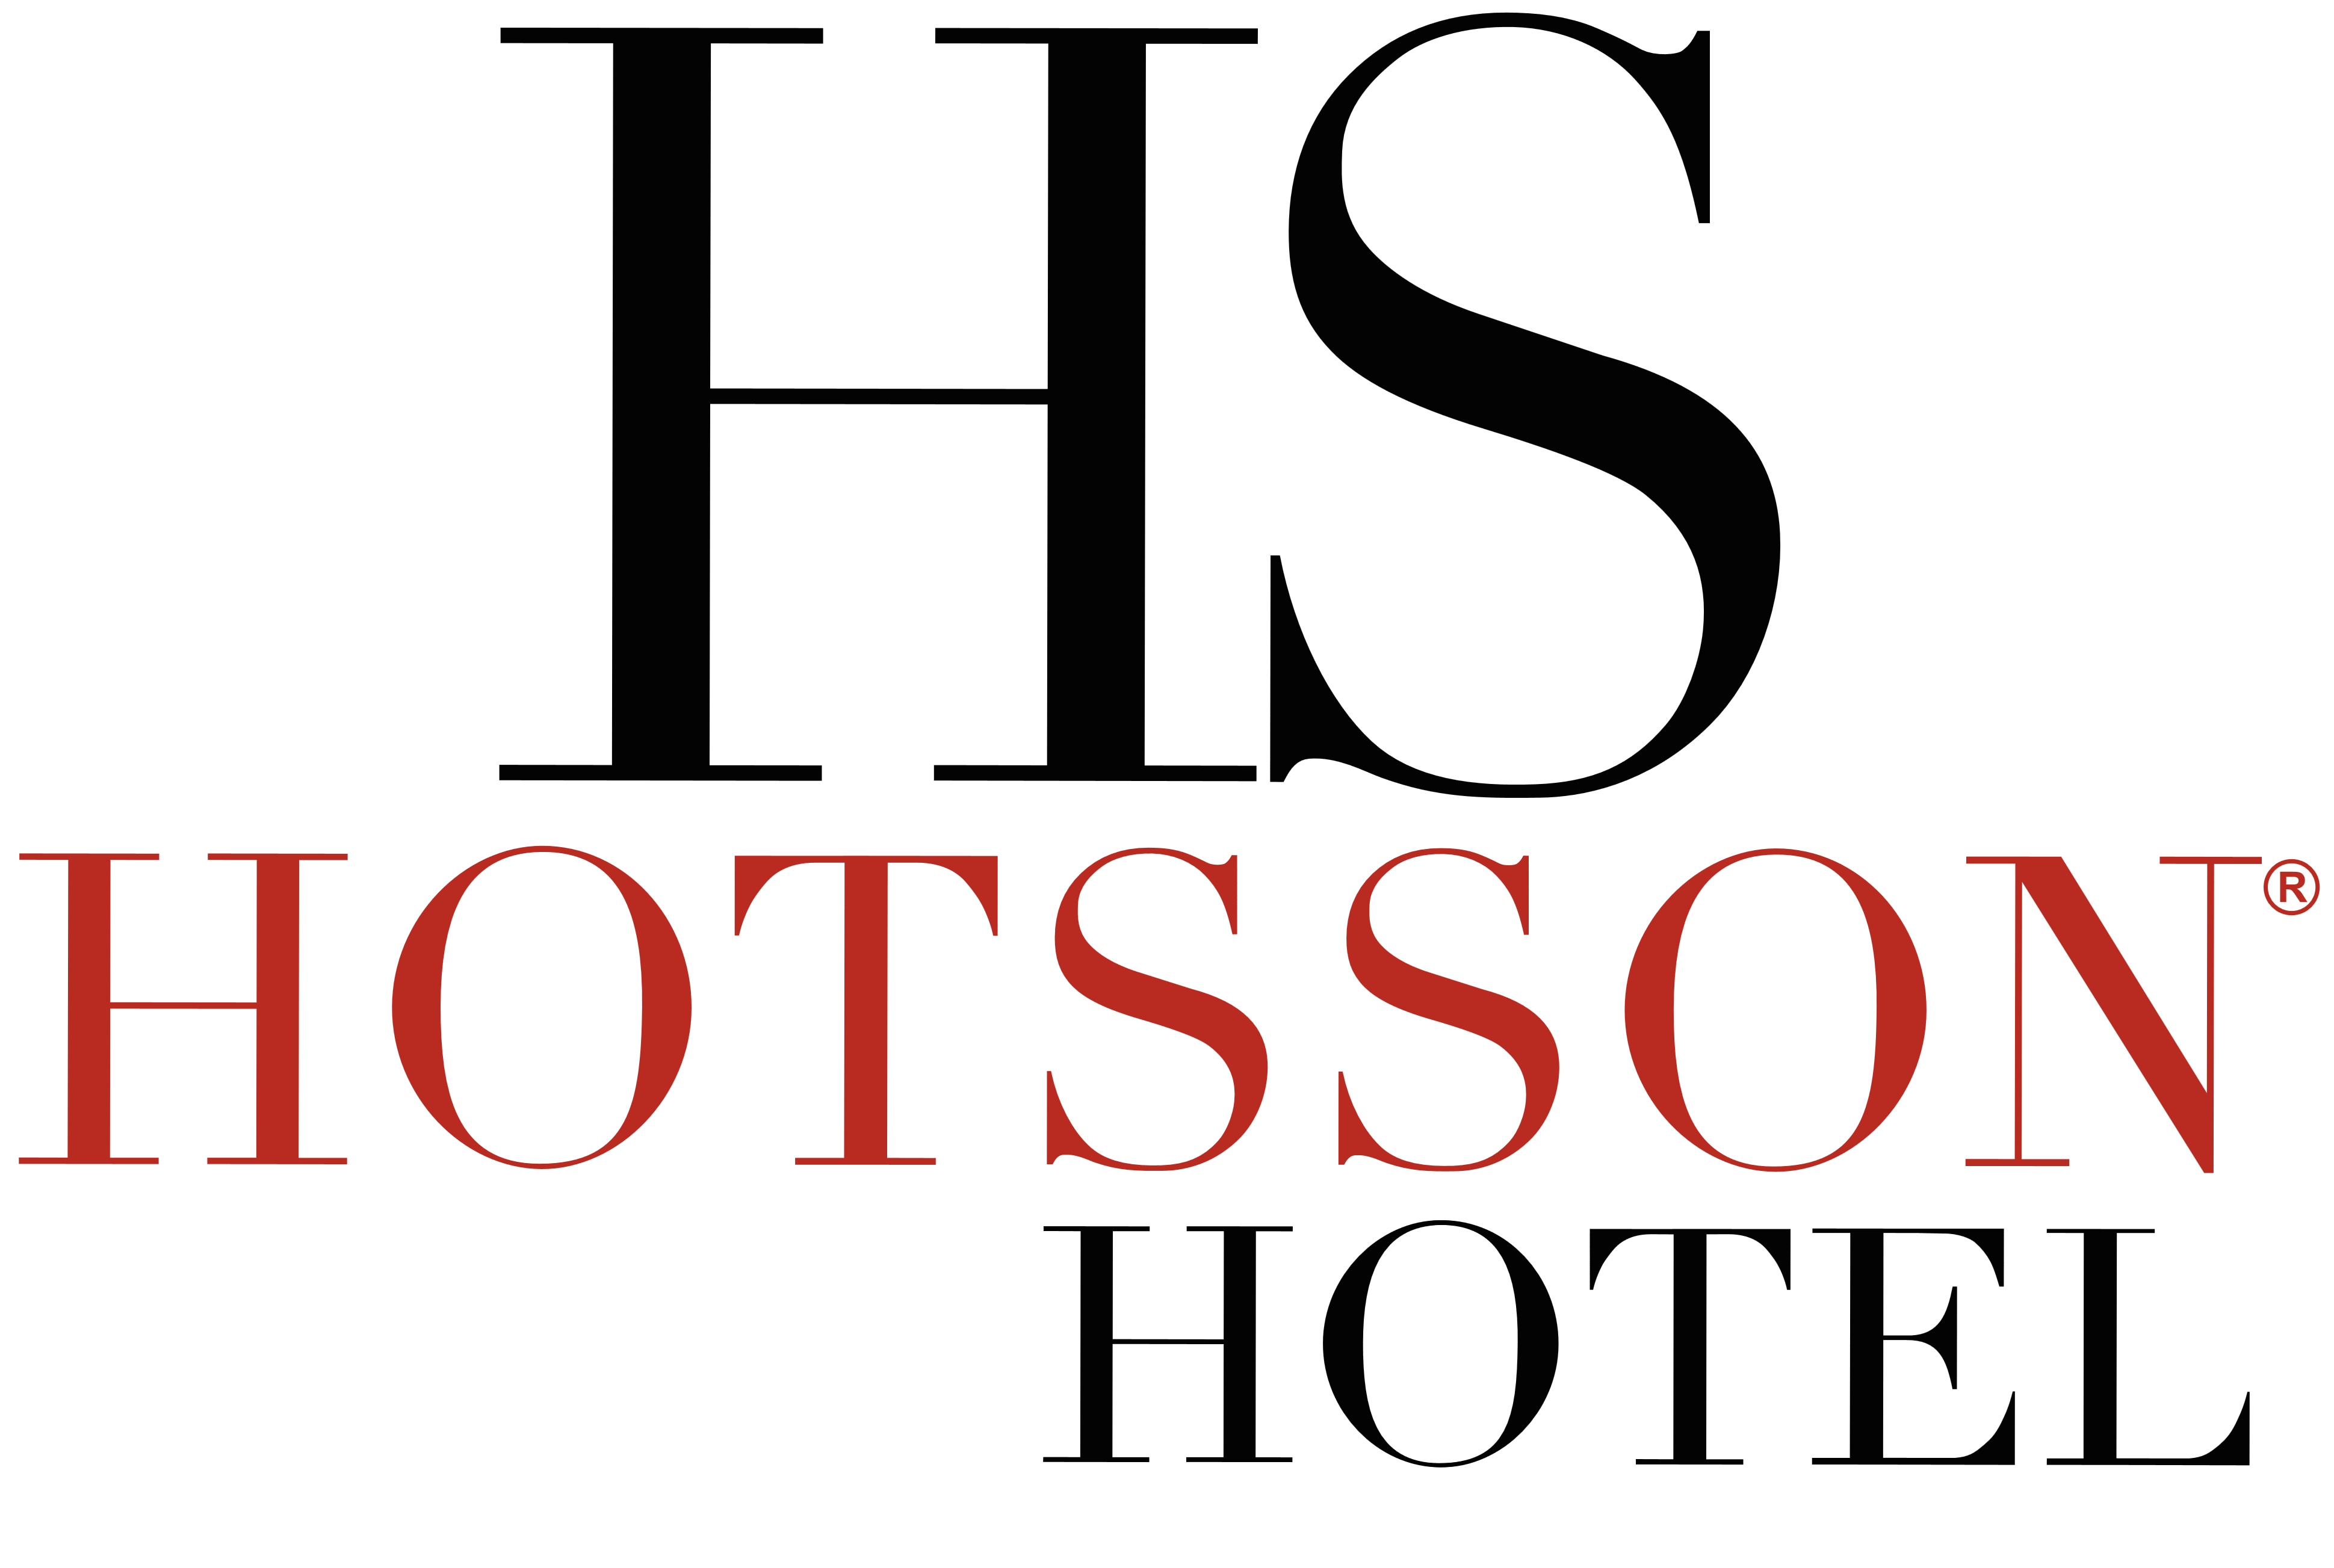 Hotsson Hotels